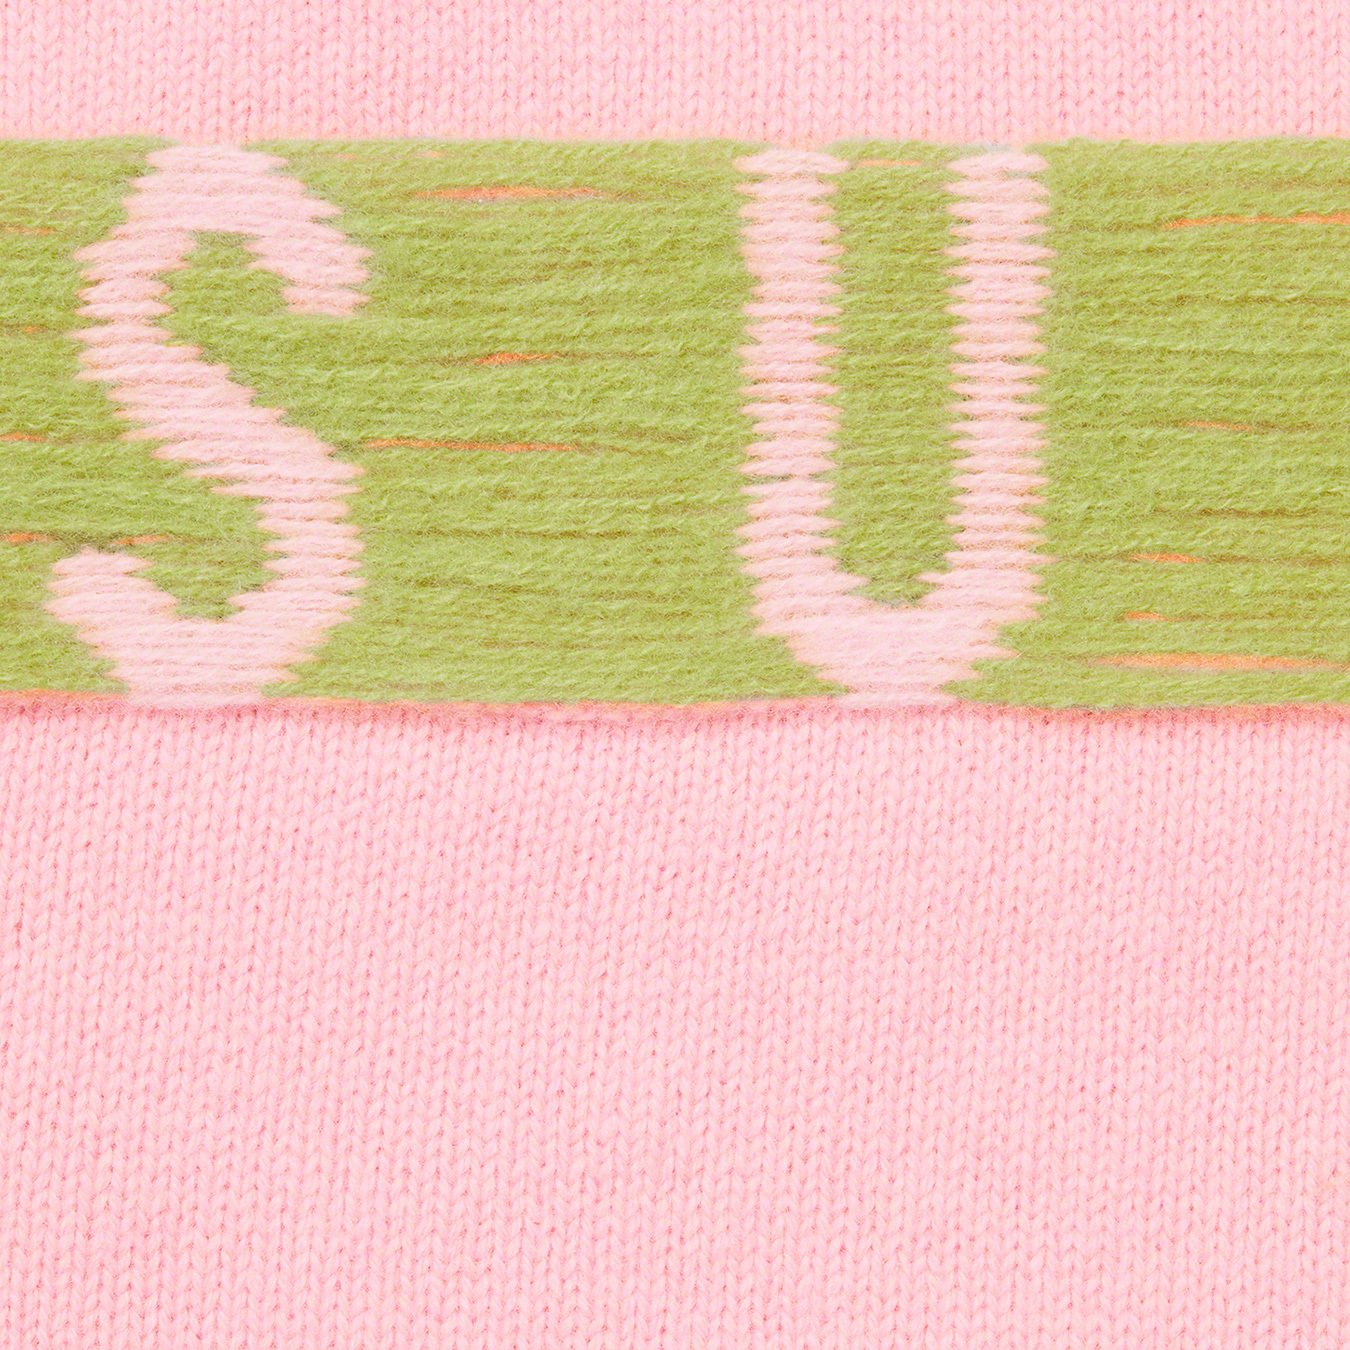 Inside Out Logo Sweater - spring summer 2021 - Supreme